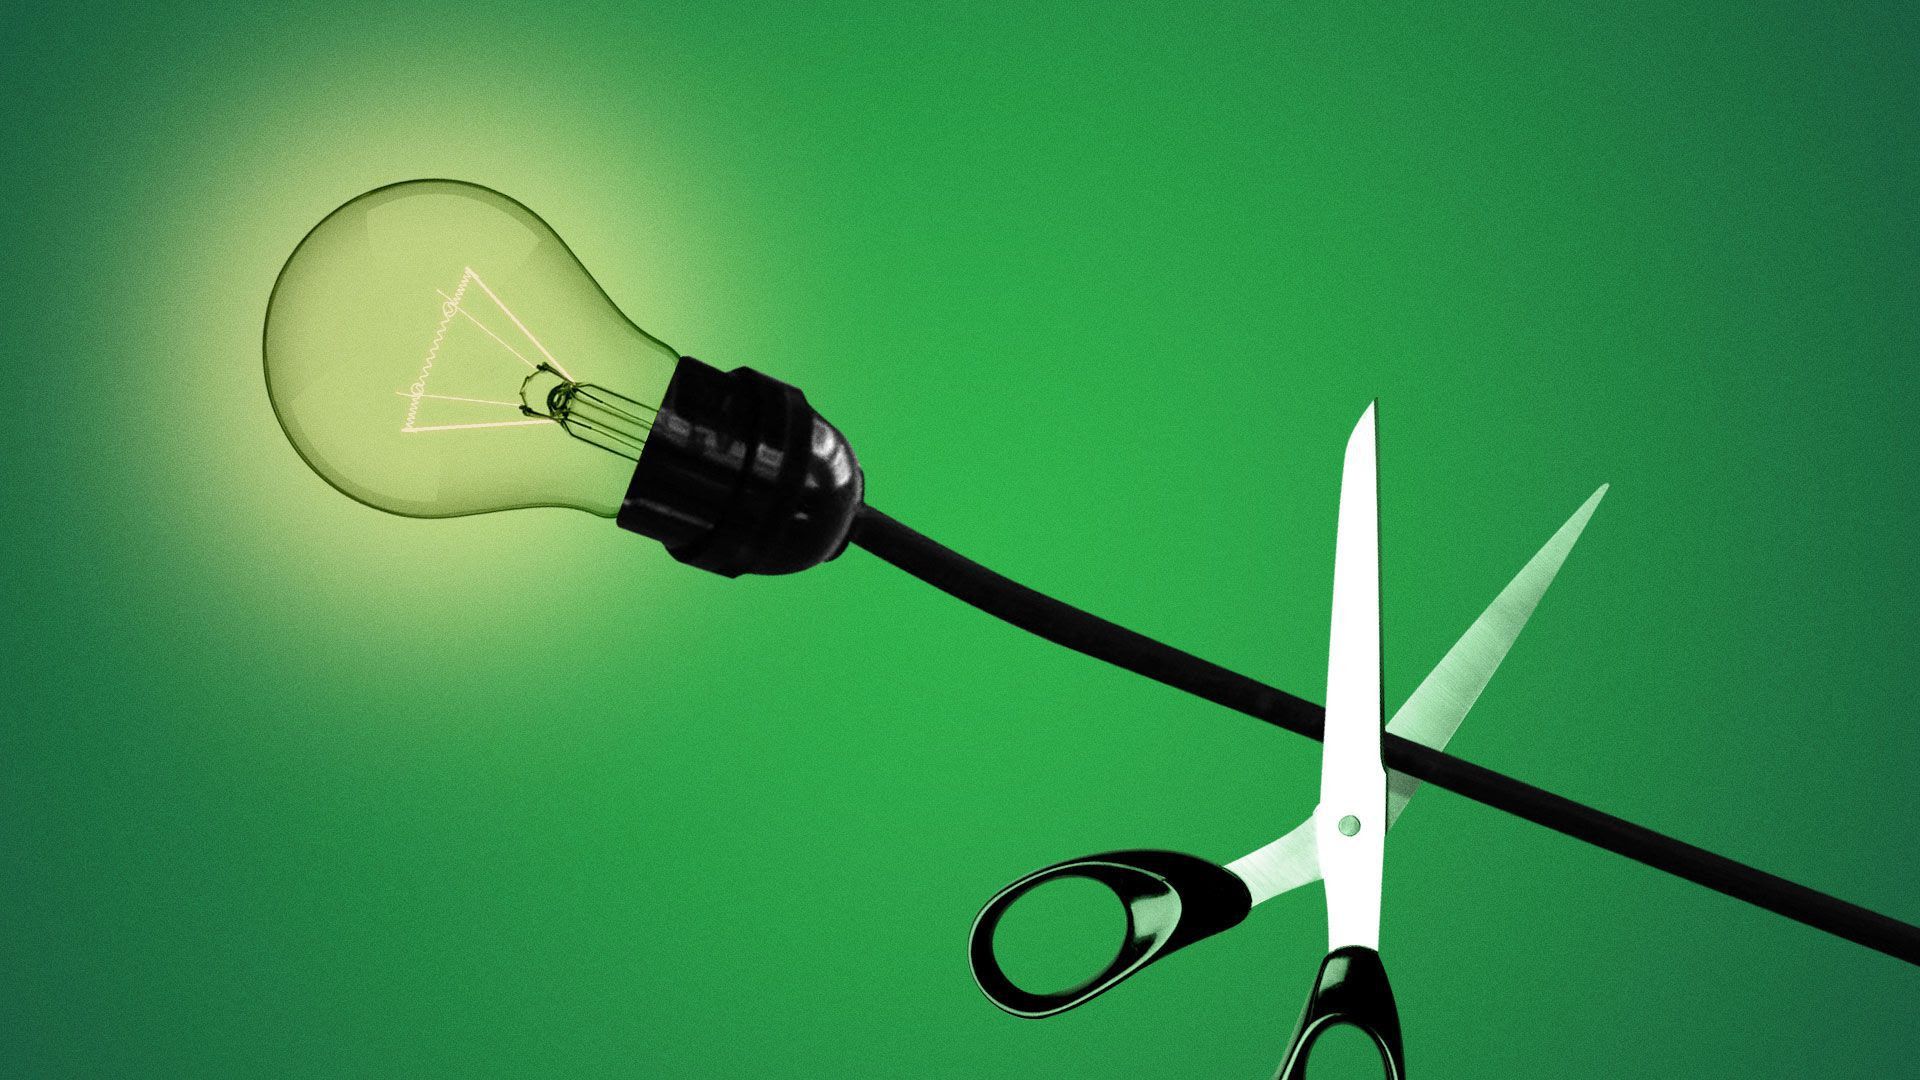 A photo of scissors cutting a light bulb.